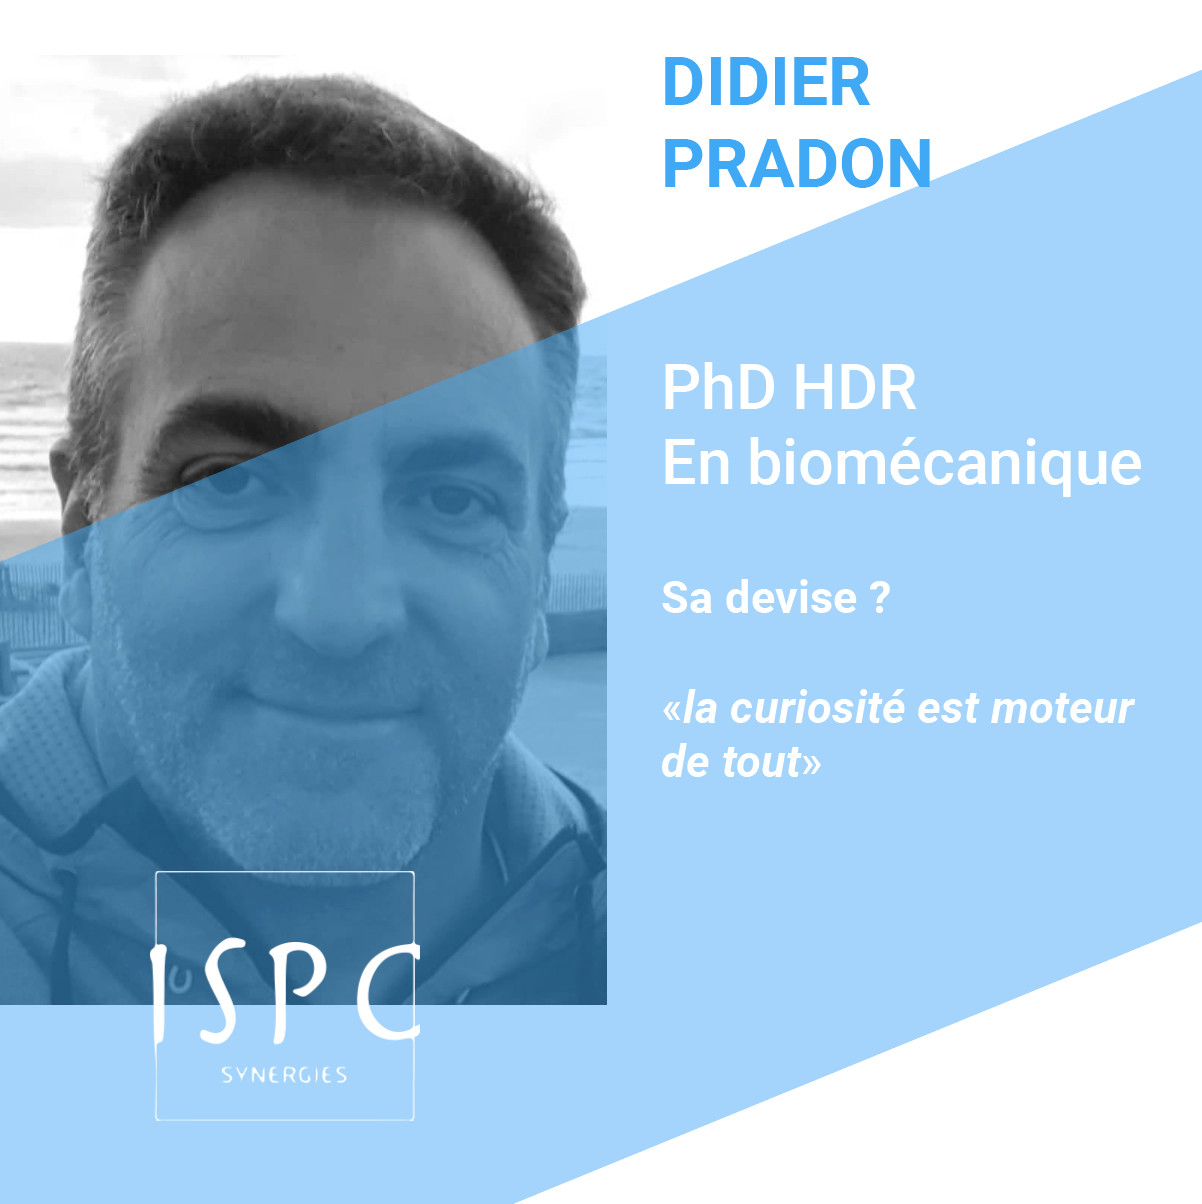 Didier PRADON, PhD HDR en biomécanique ISPC